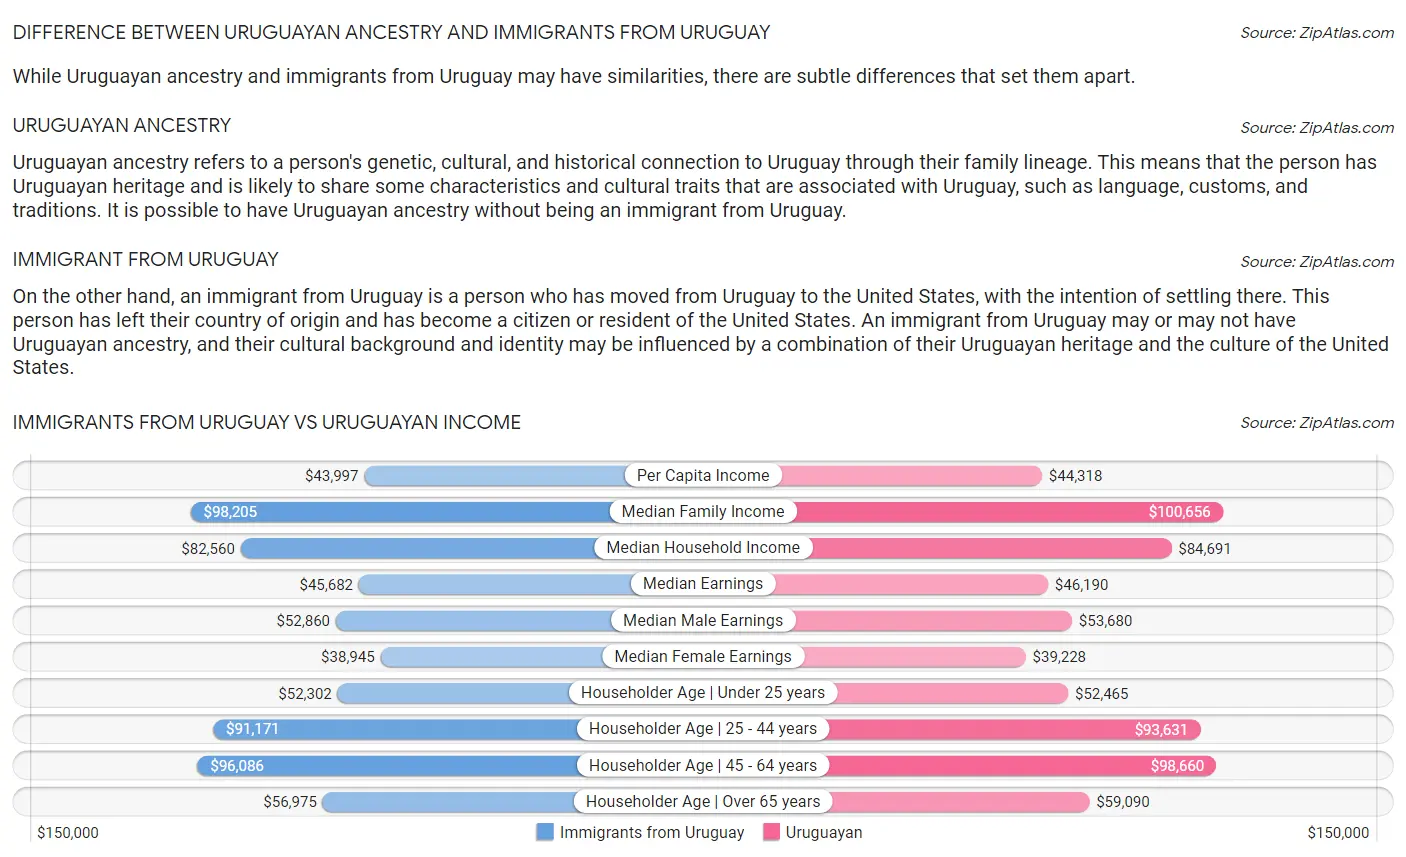 Immigrants from Uruguay vs Uruguayan Income